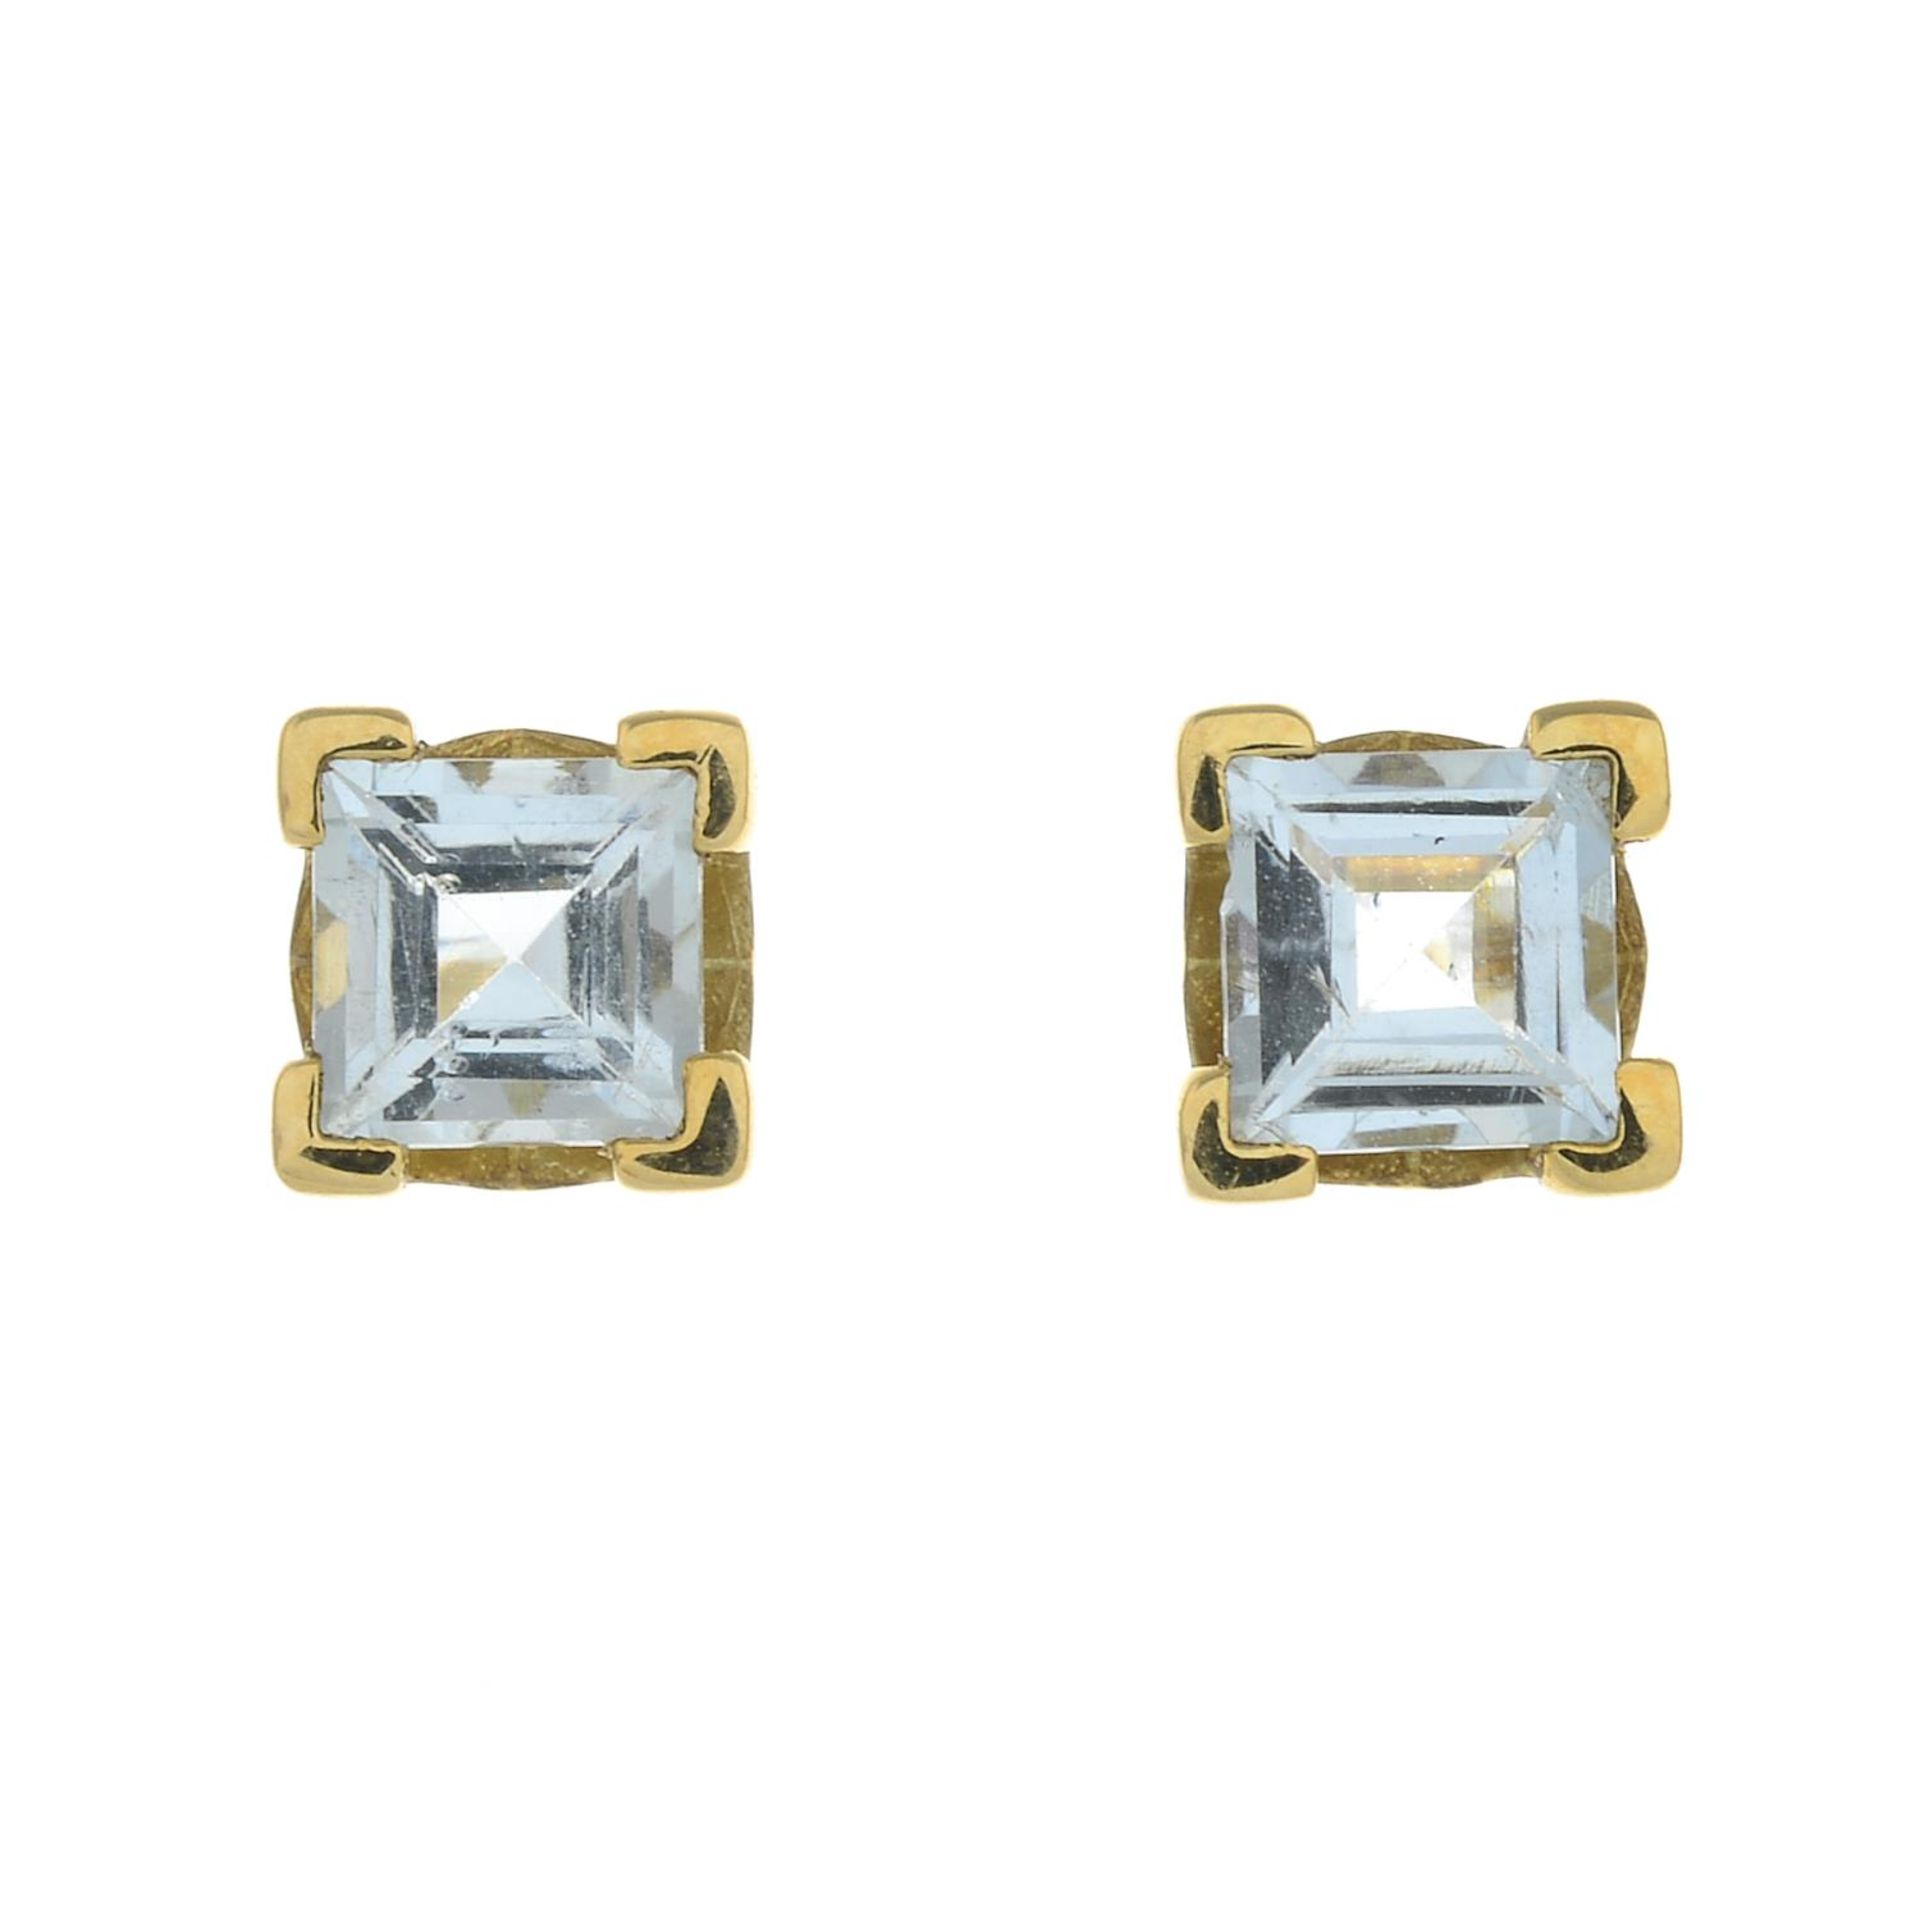 Pair of 18ct gold aquamarine earrings,